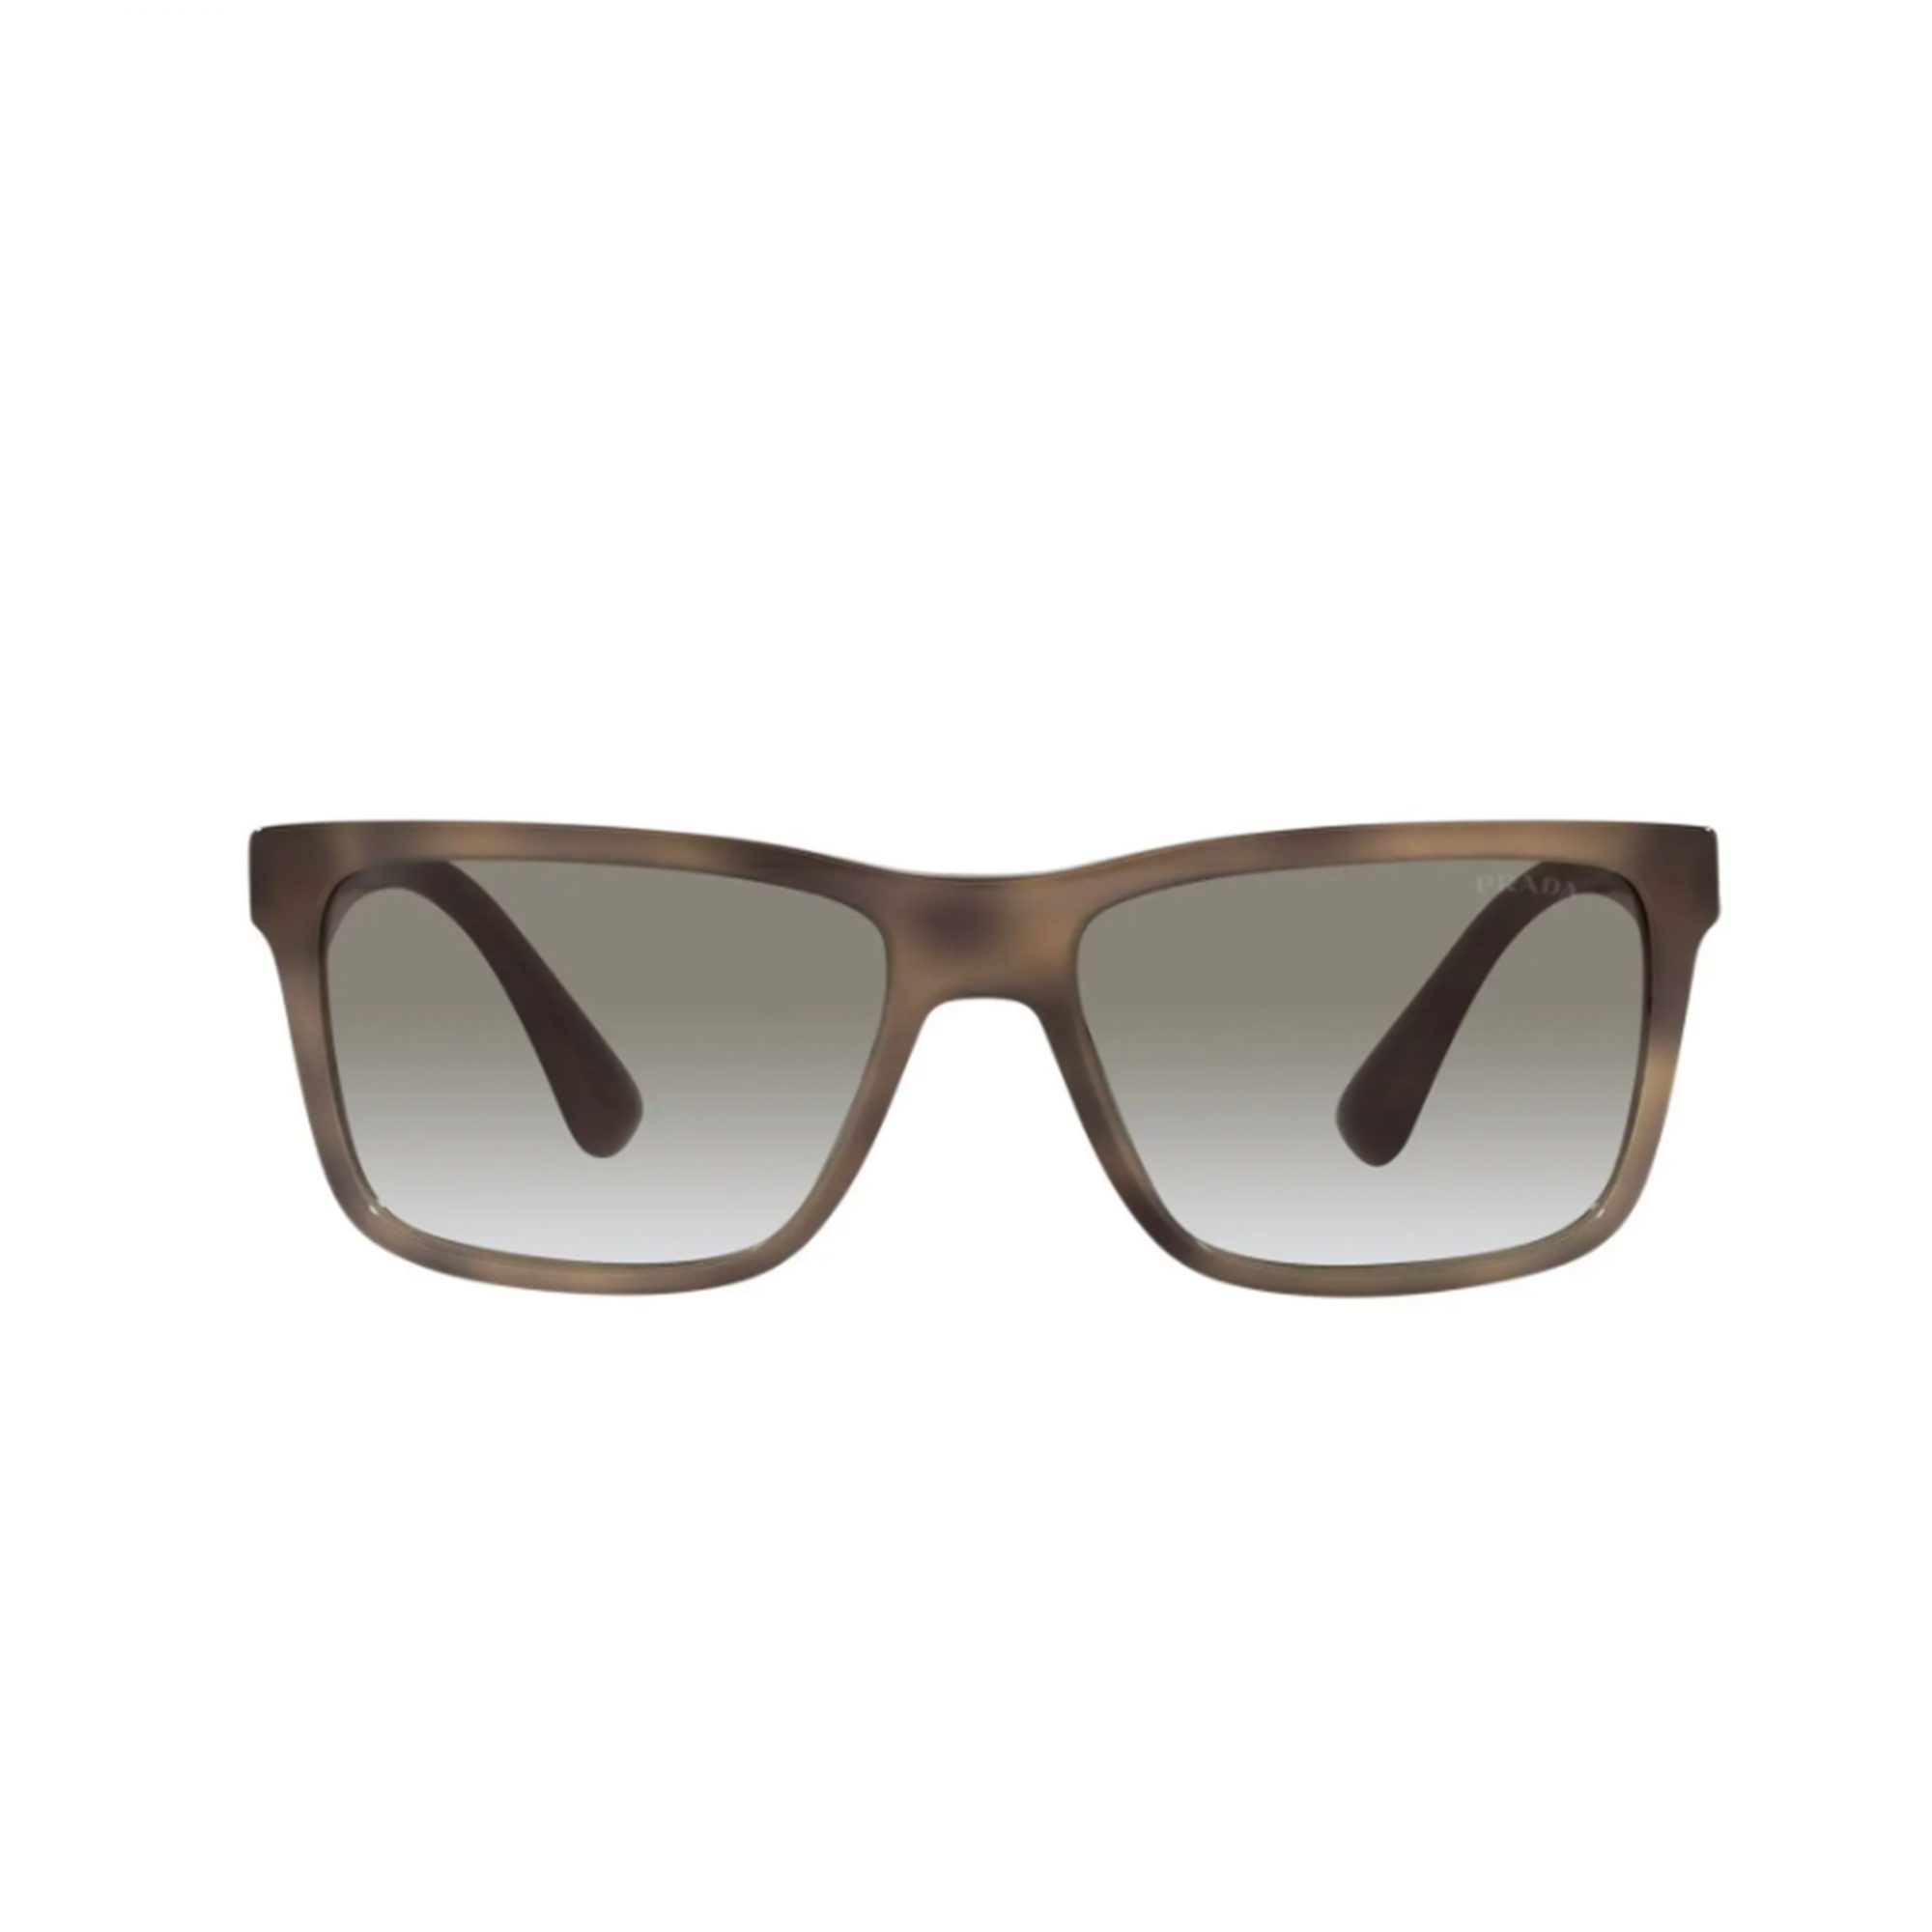 prada-squared-mirrored-sunglasses